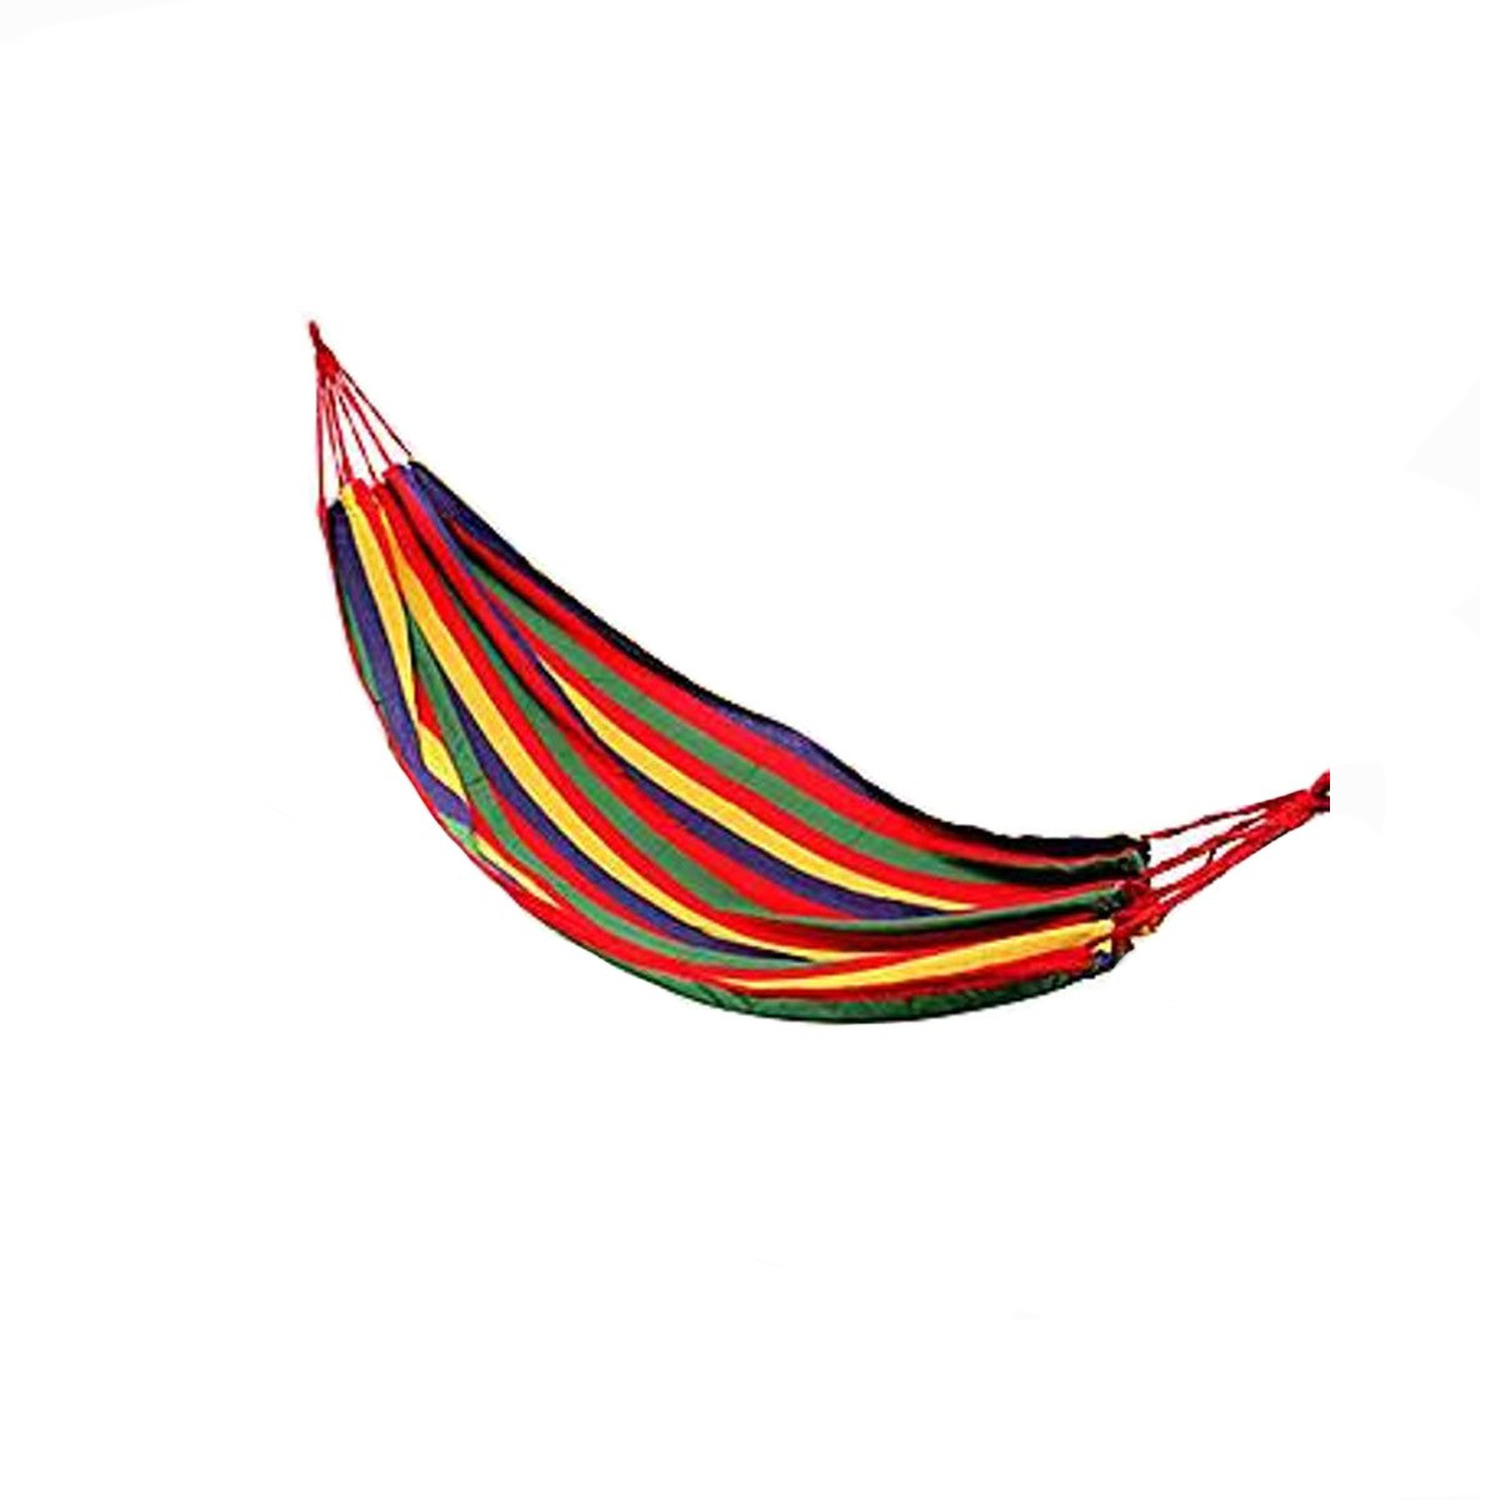 Hangmat geel-rood gestreept 200 x 100 cm met opbergtas